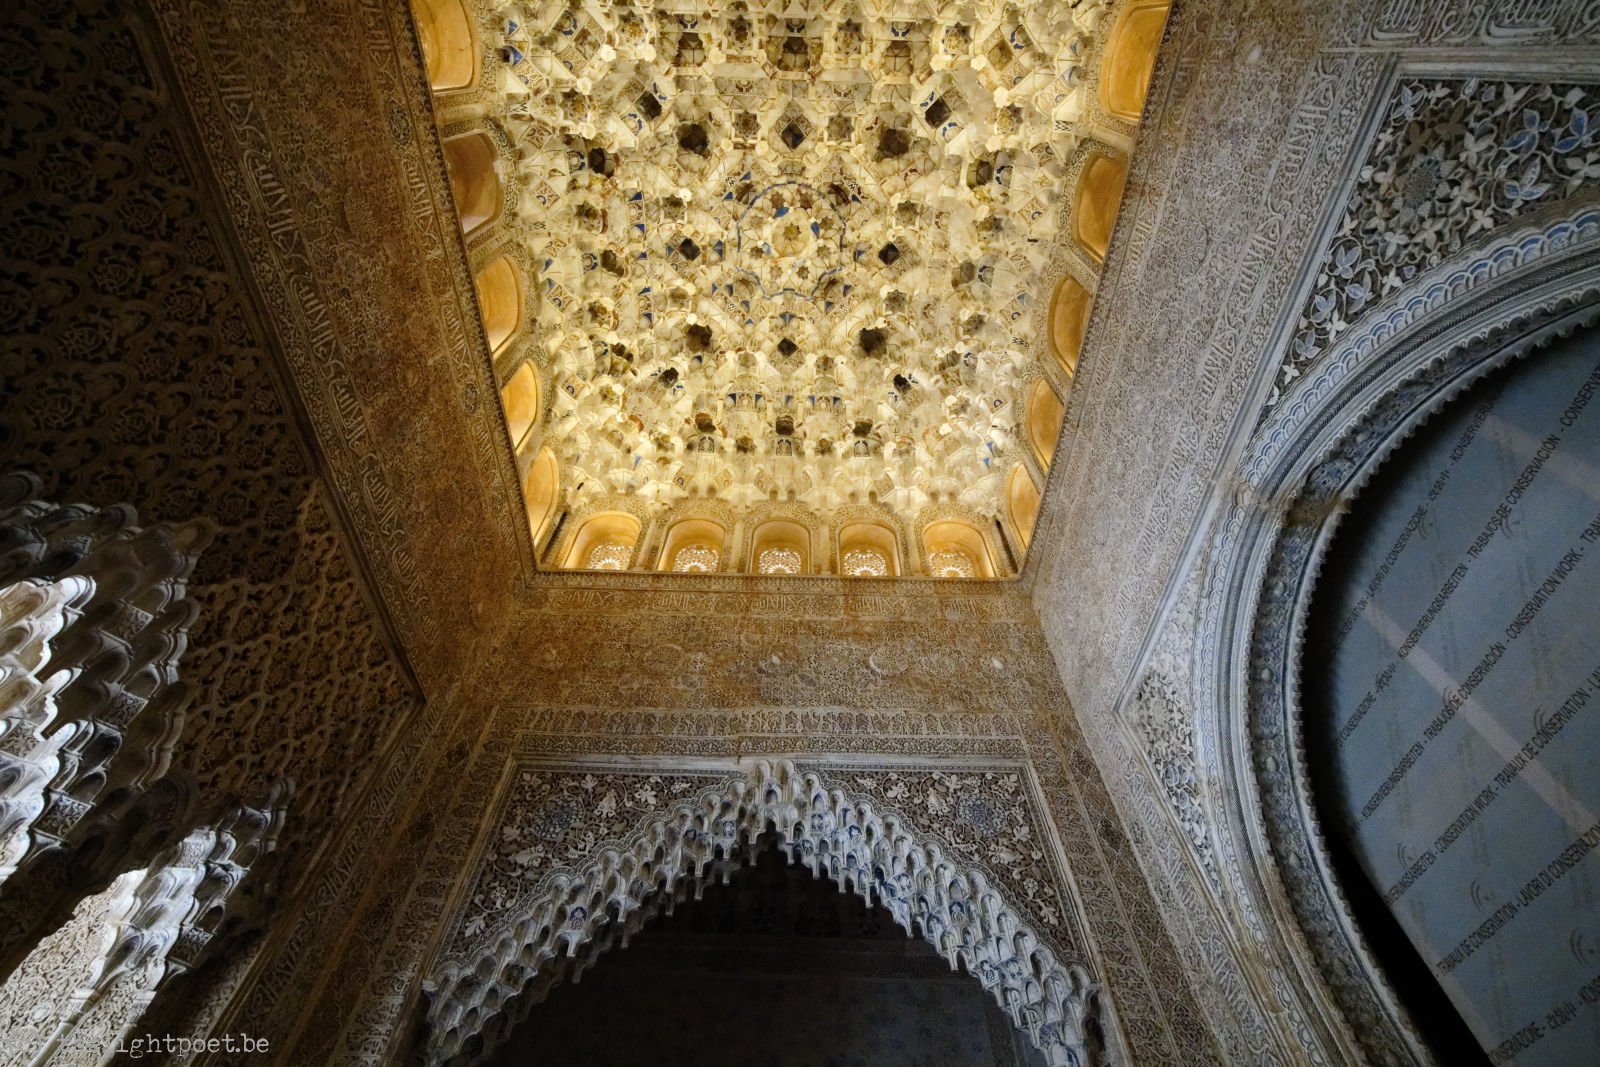 Alhambra, April 2018